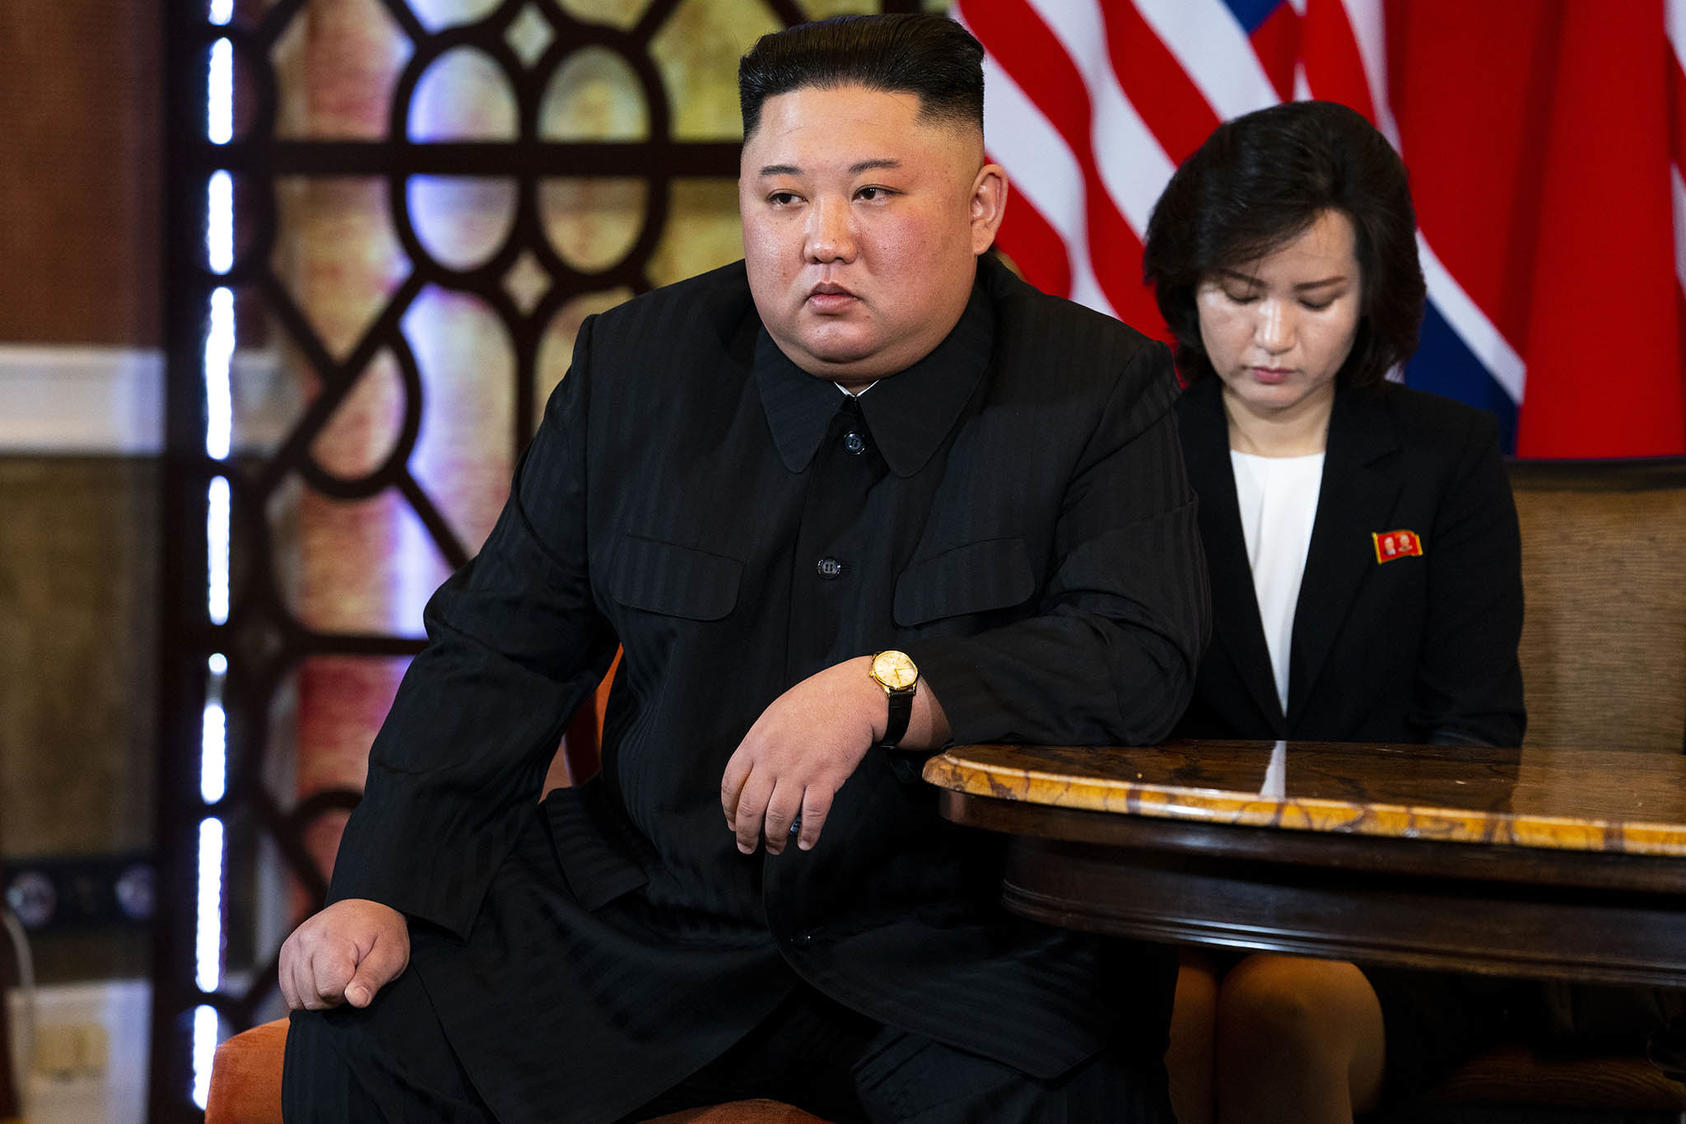 North Korean leader Kim Jong Un at the Metropole Hotel in Hanoi, Vietnam, on February 28, 2019. (Doug Mills/The New York Times)